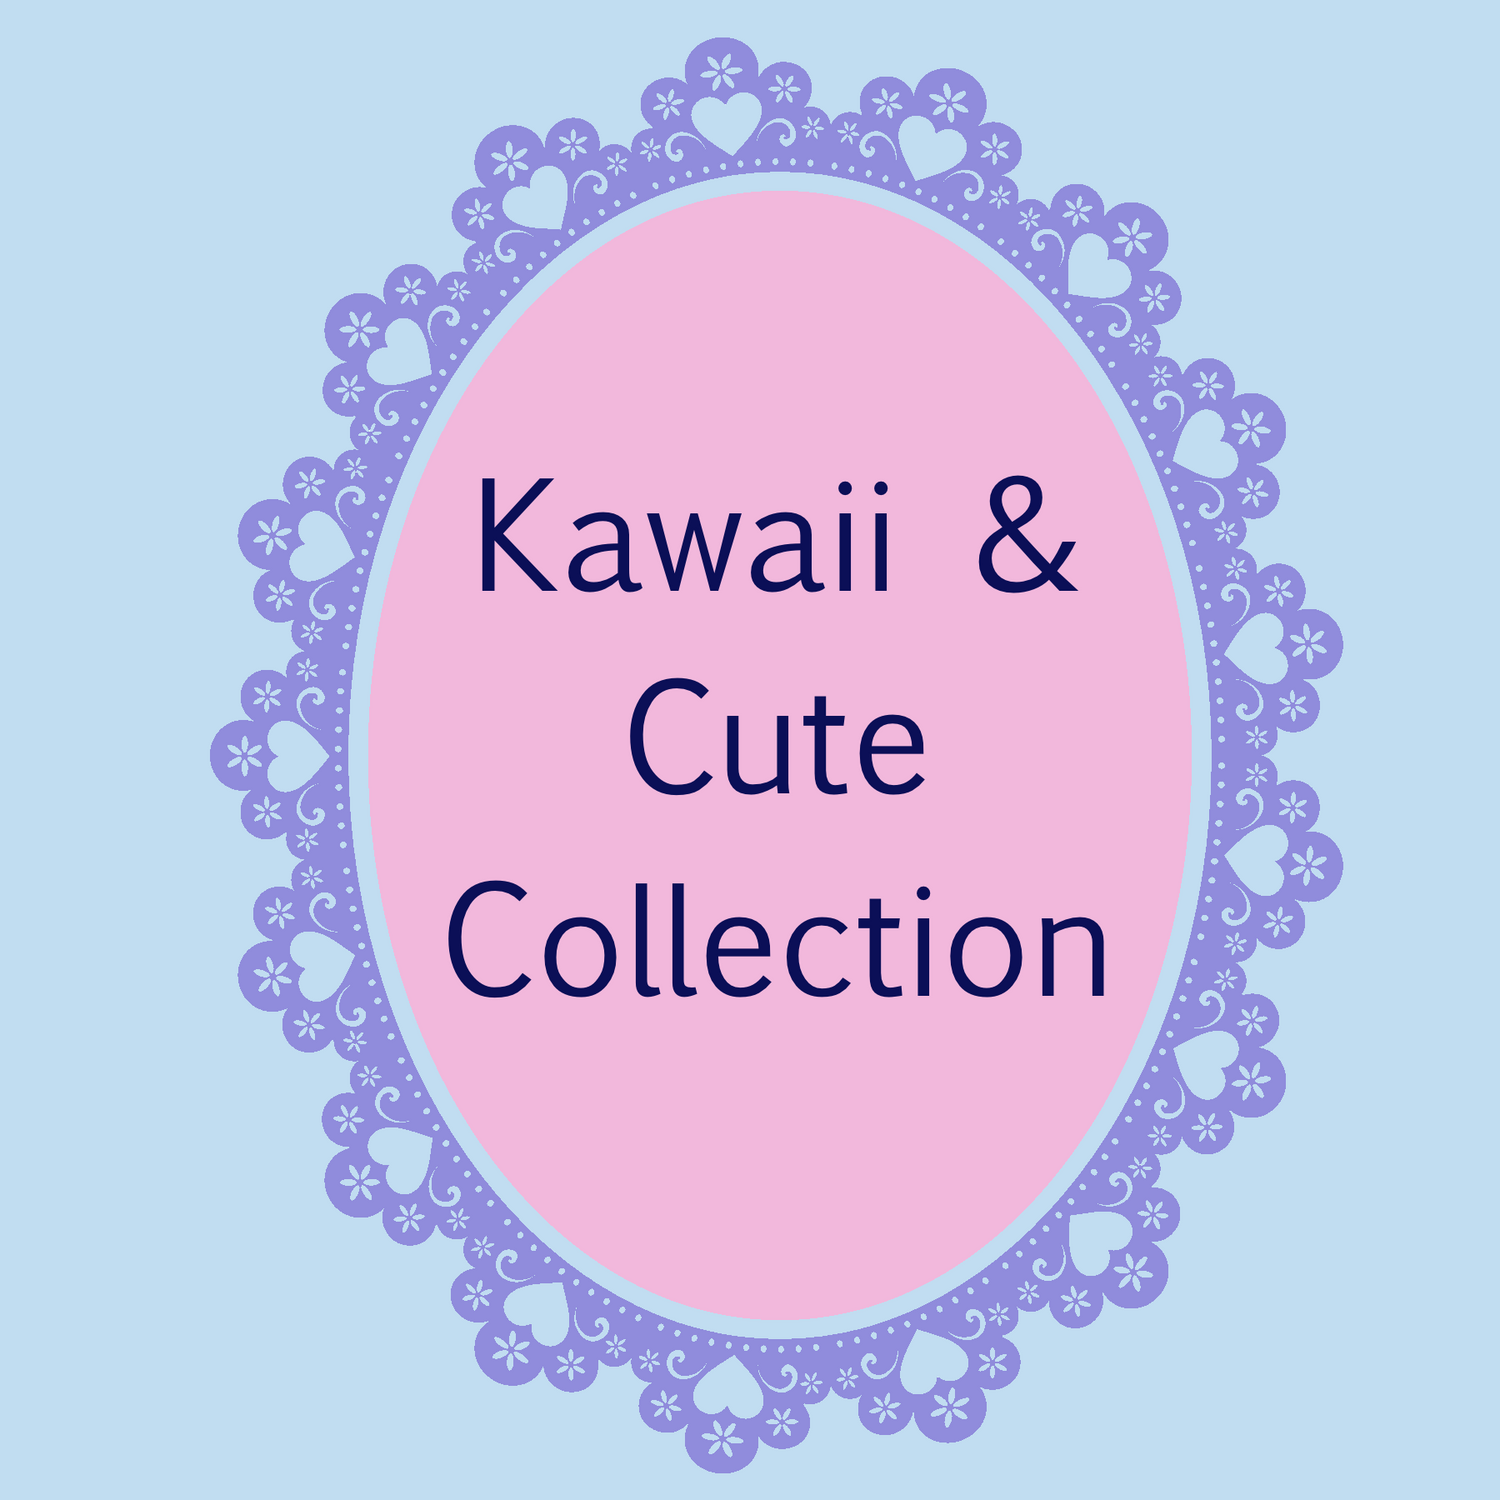 Kawaii & Cute Collection